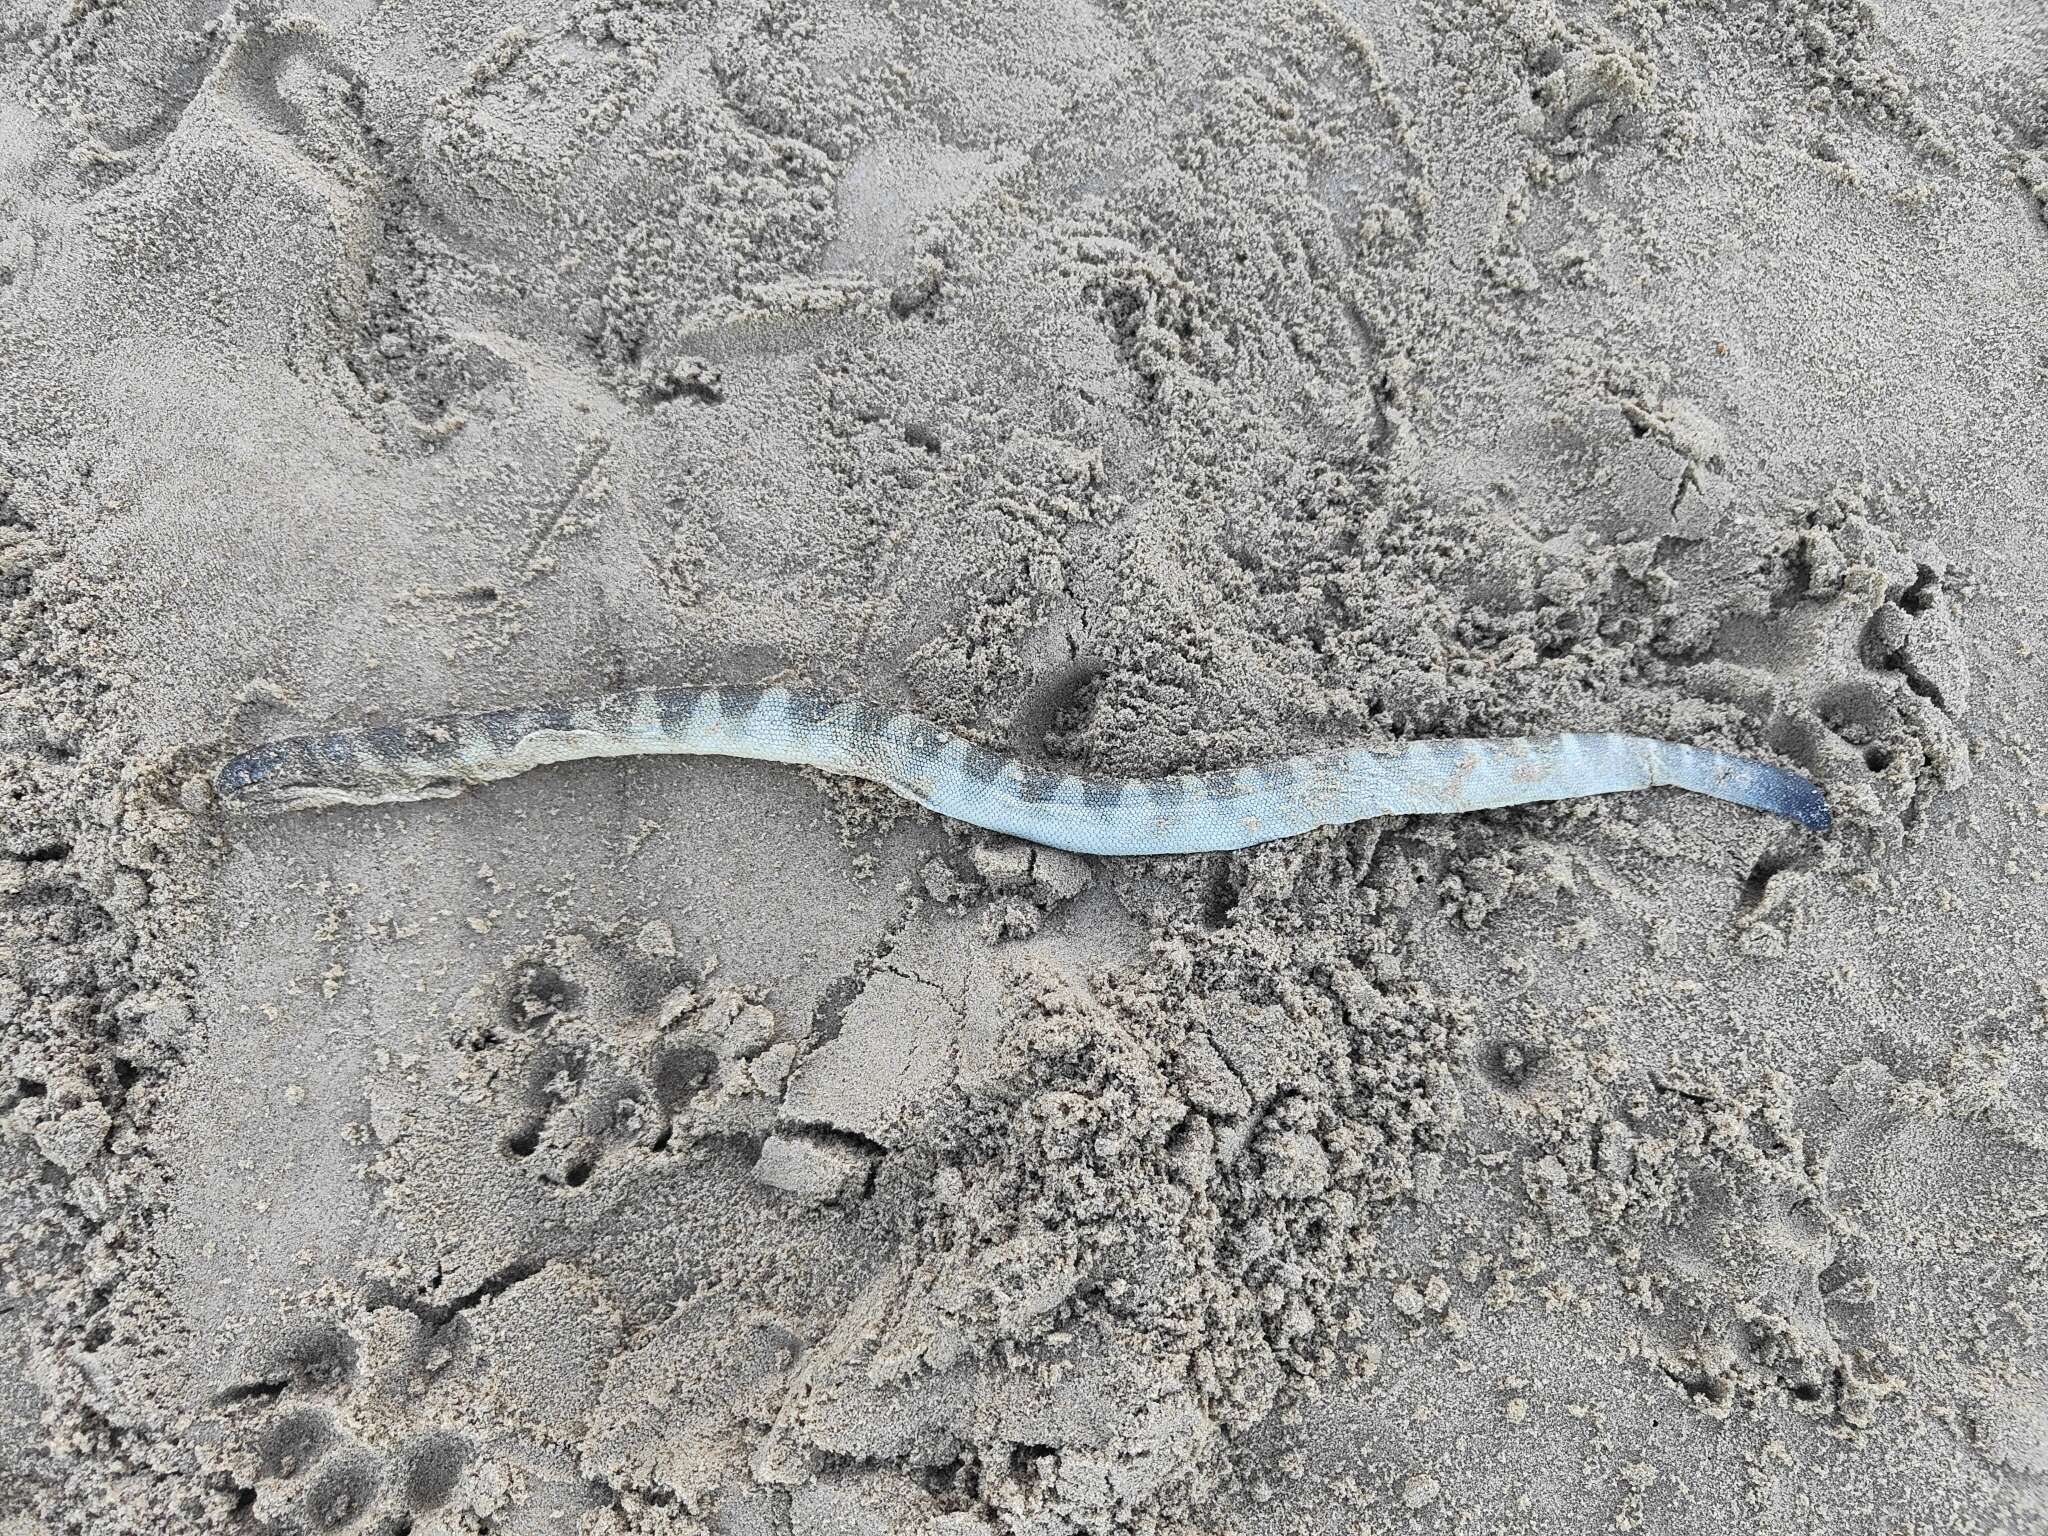 Image of Shaw's Sea Snake